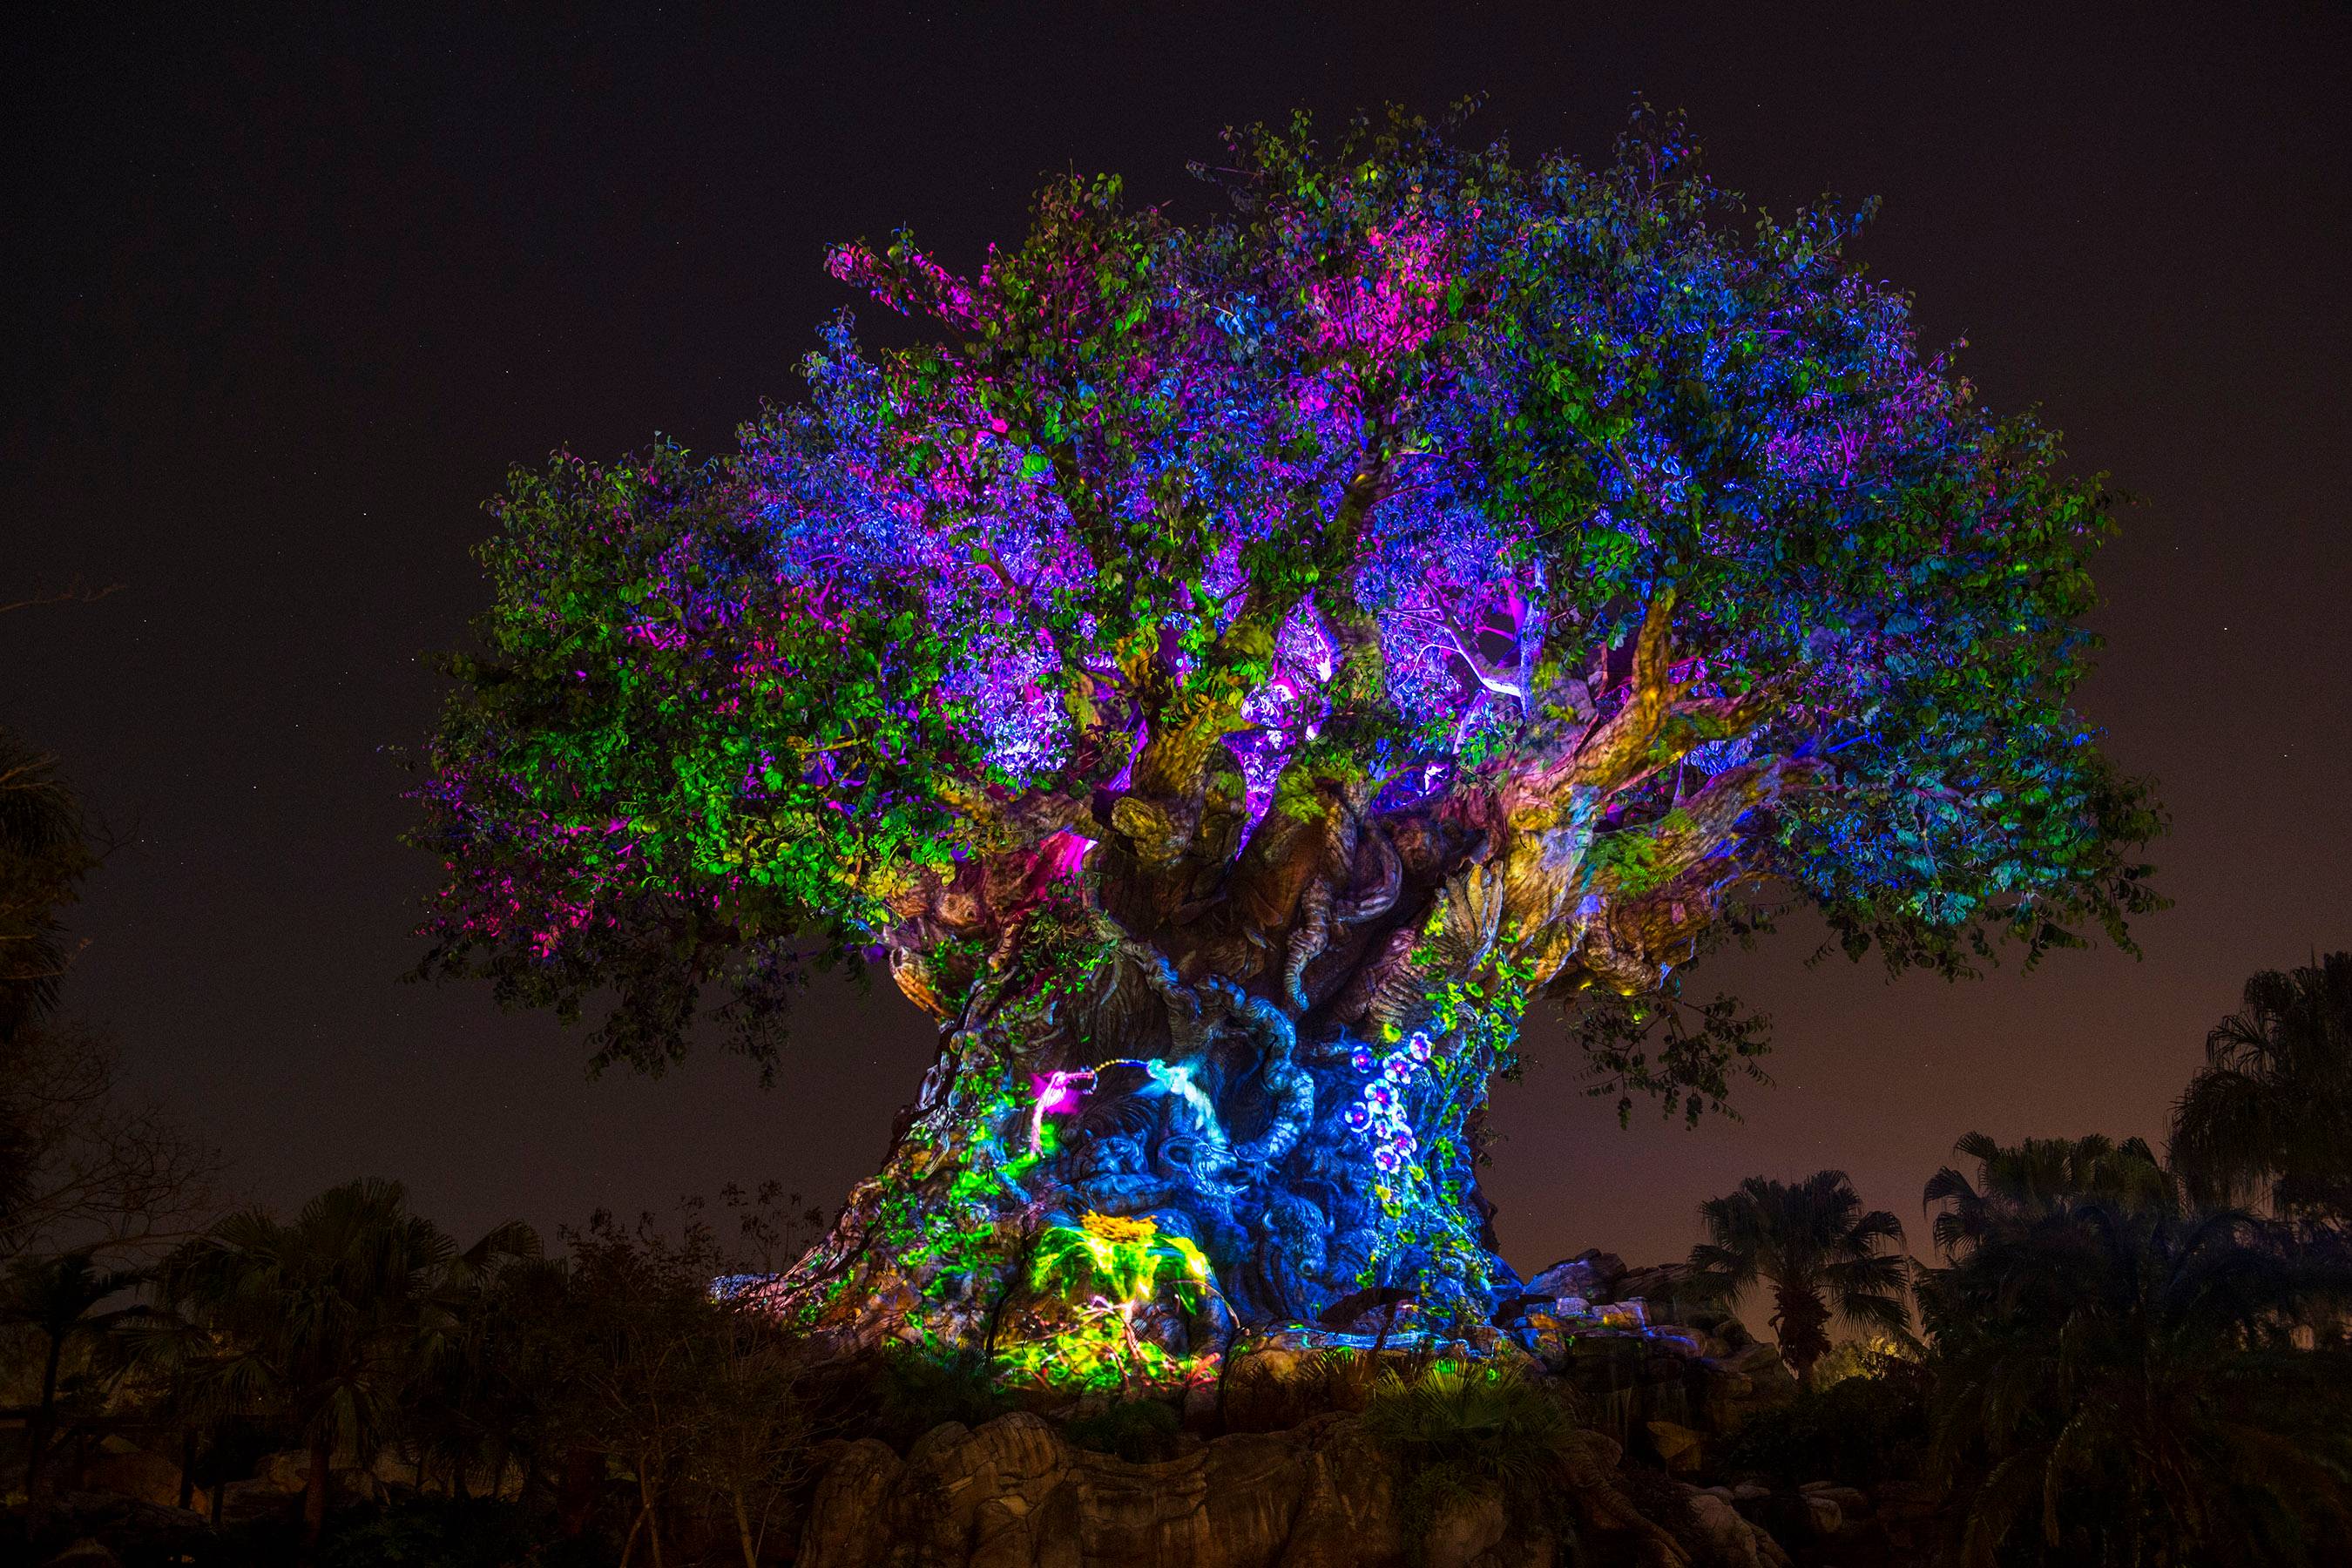 VIDEO - The Tree of Life Awakens at Disney's Animal Kingdom